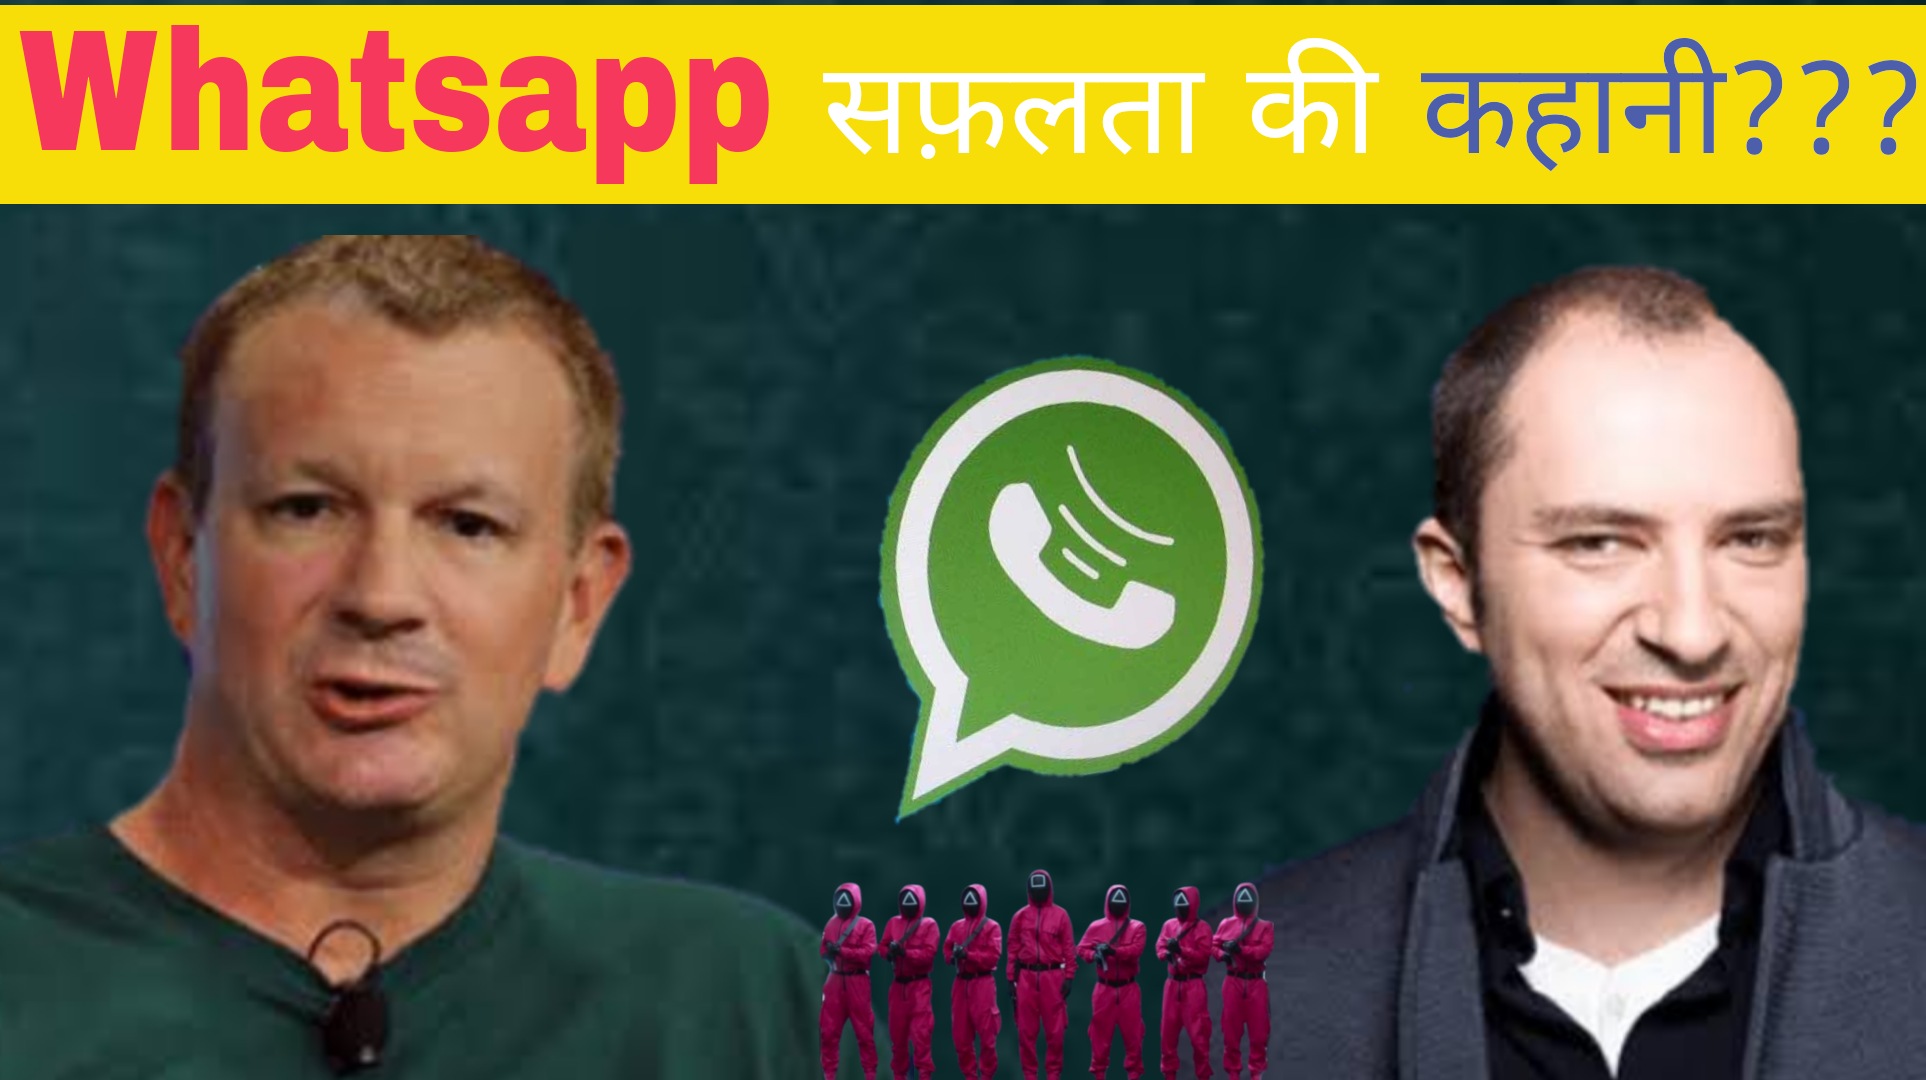 Whatsapp success story